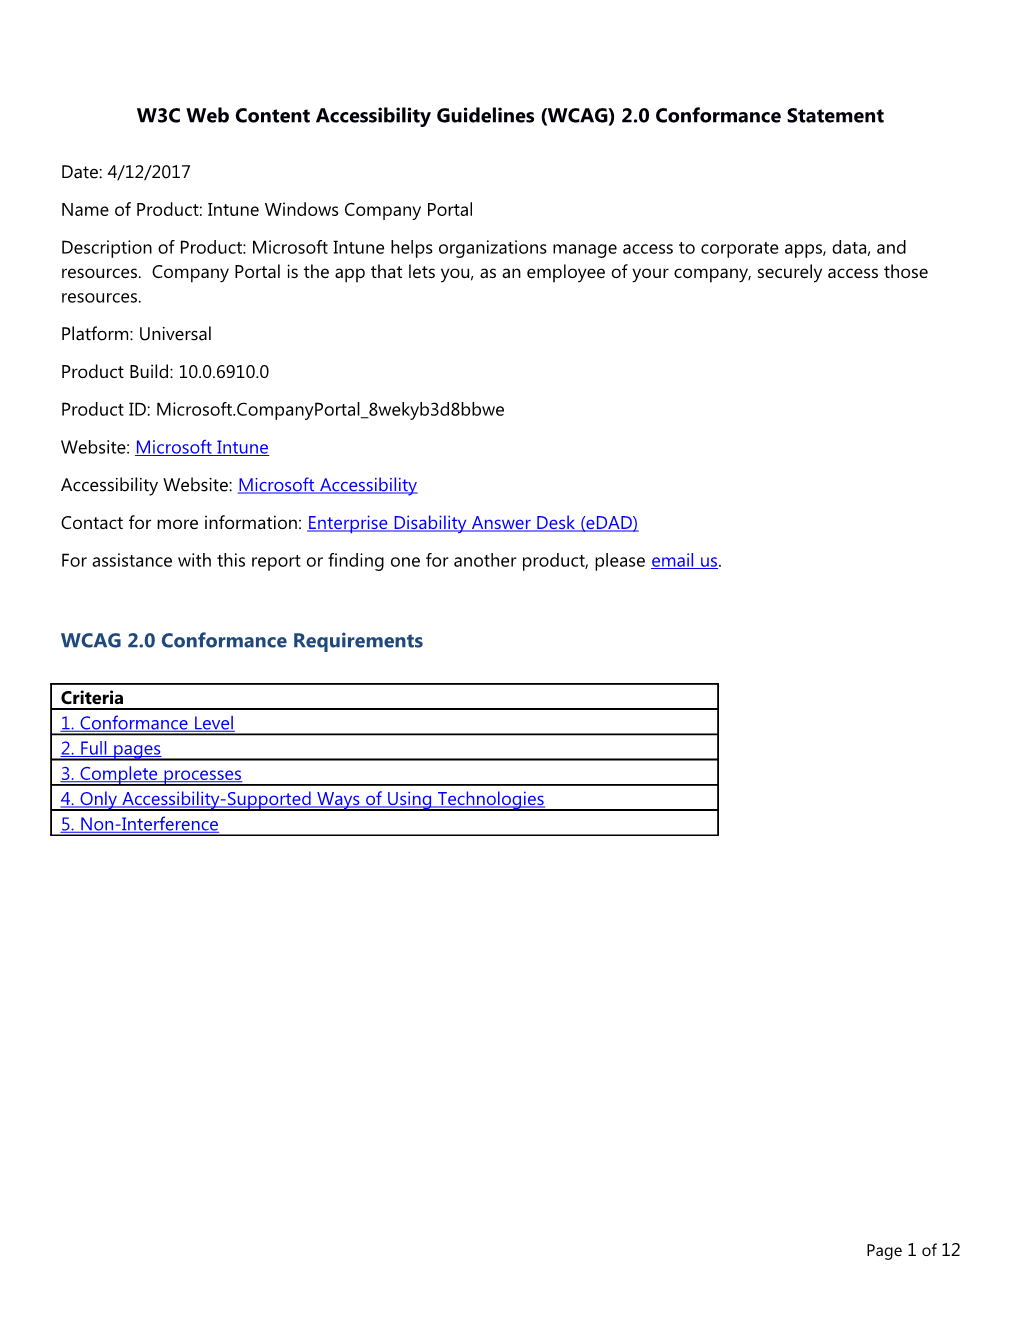 W3C Web Content Accessibility Guidelines (WCAG) 2.0 Conformance Statement s15